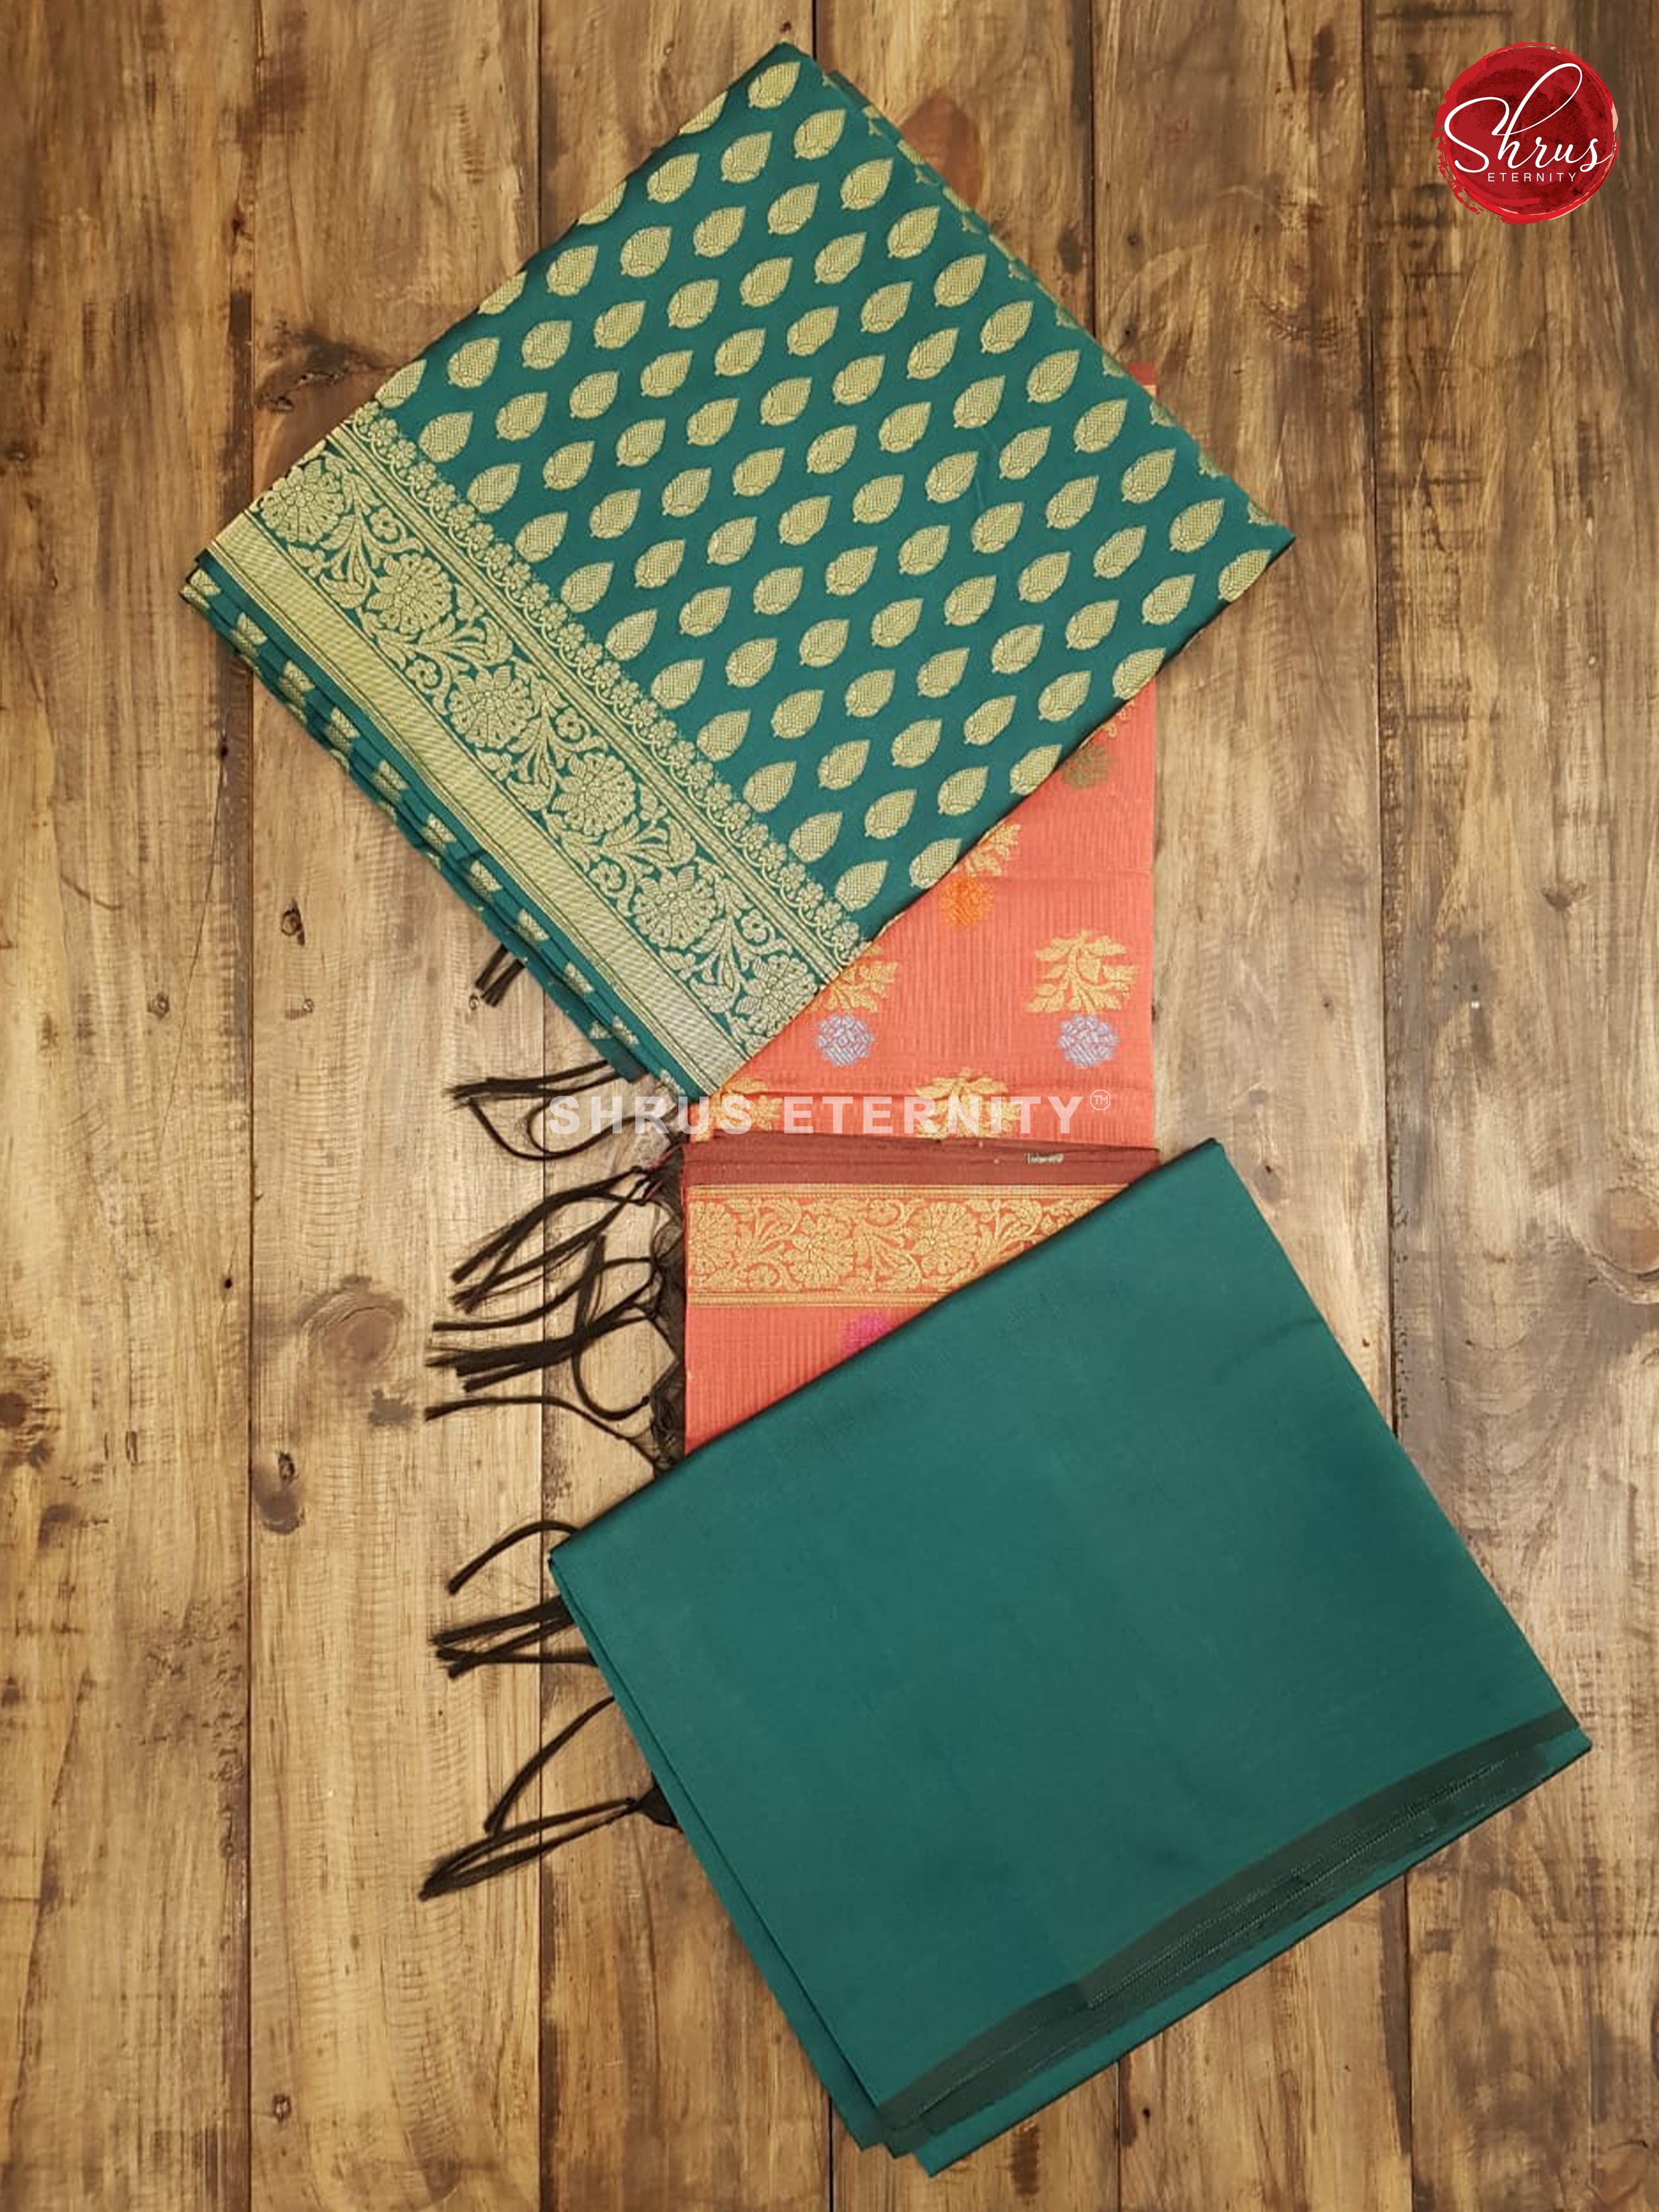 Green & Pink - Semi Banarasi Suit - Shop on ShrusEternity.com